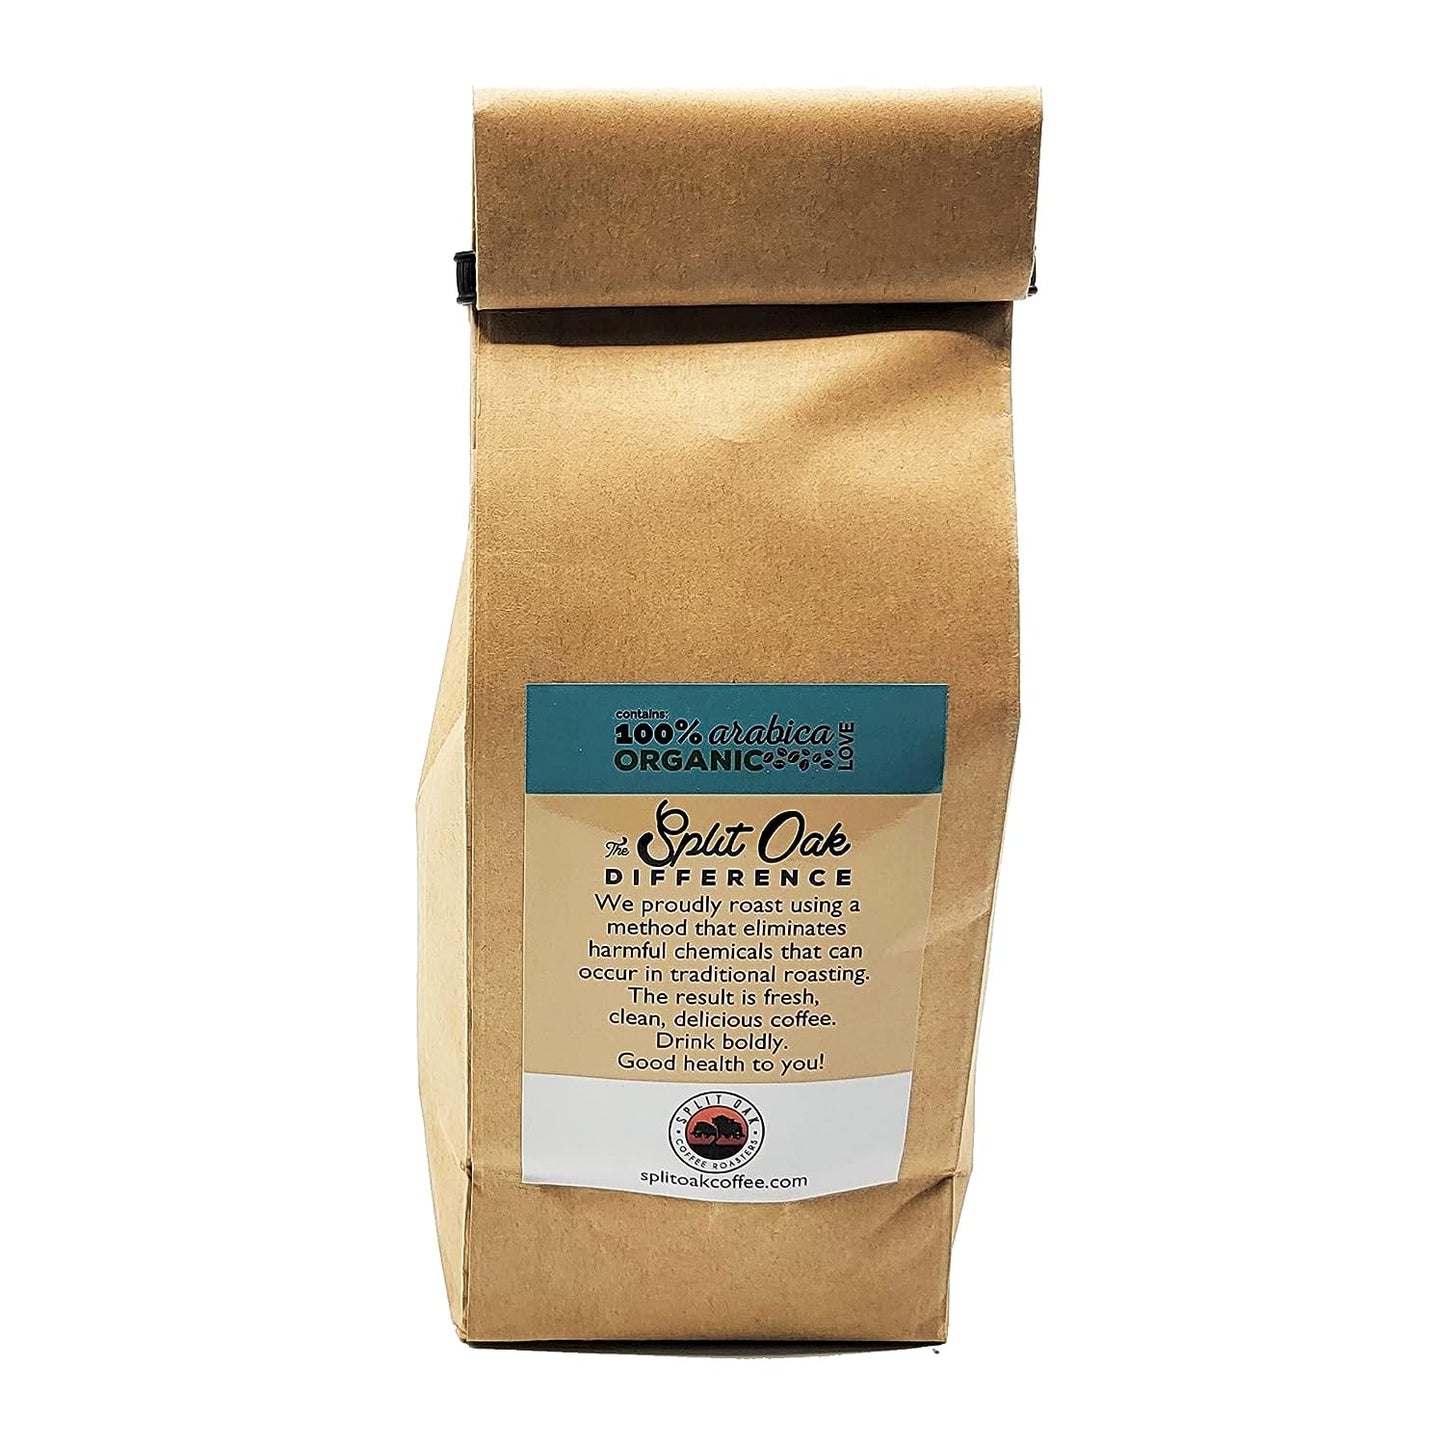 3 Pack Organic Decaf Coffee Medium Roasted Peru Coffee Whole Beans 12oz. Sweet Espresso Crema, Almond Flavored. Fair Trade